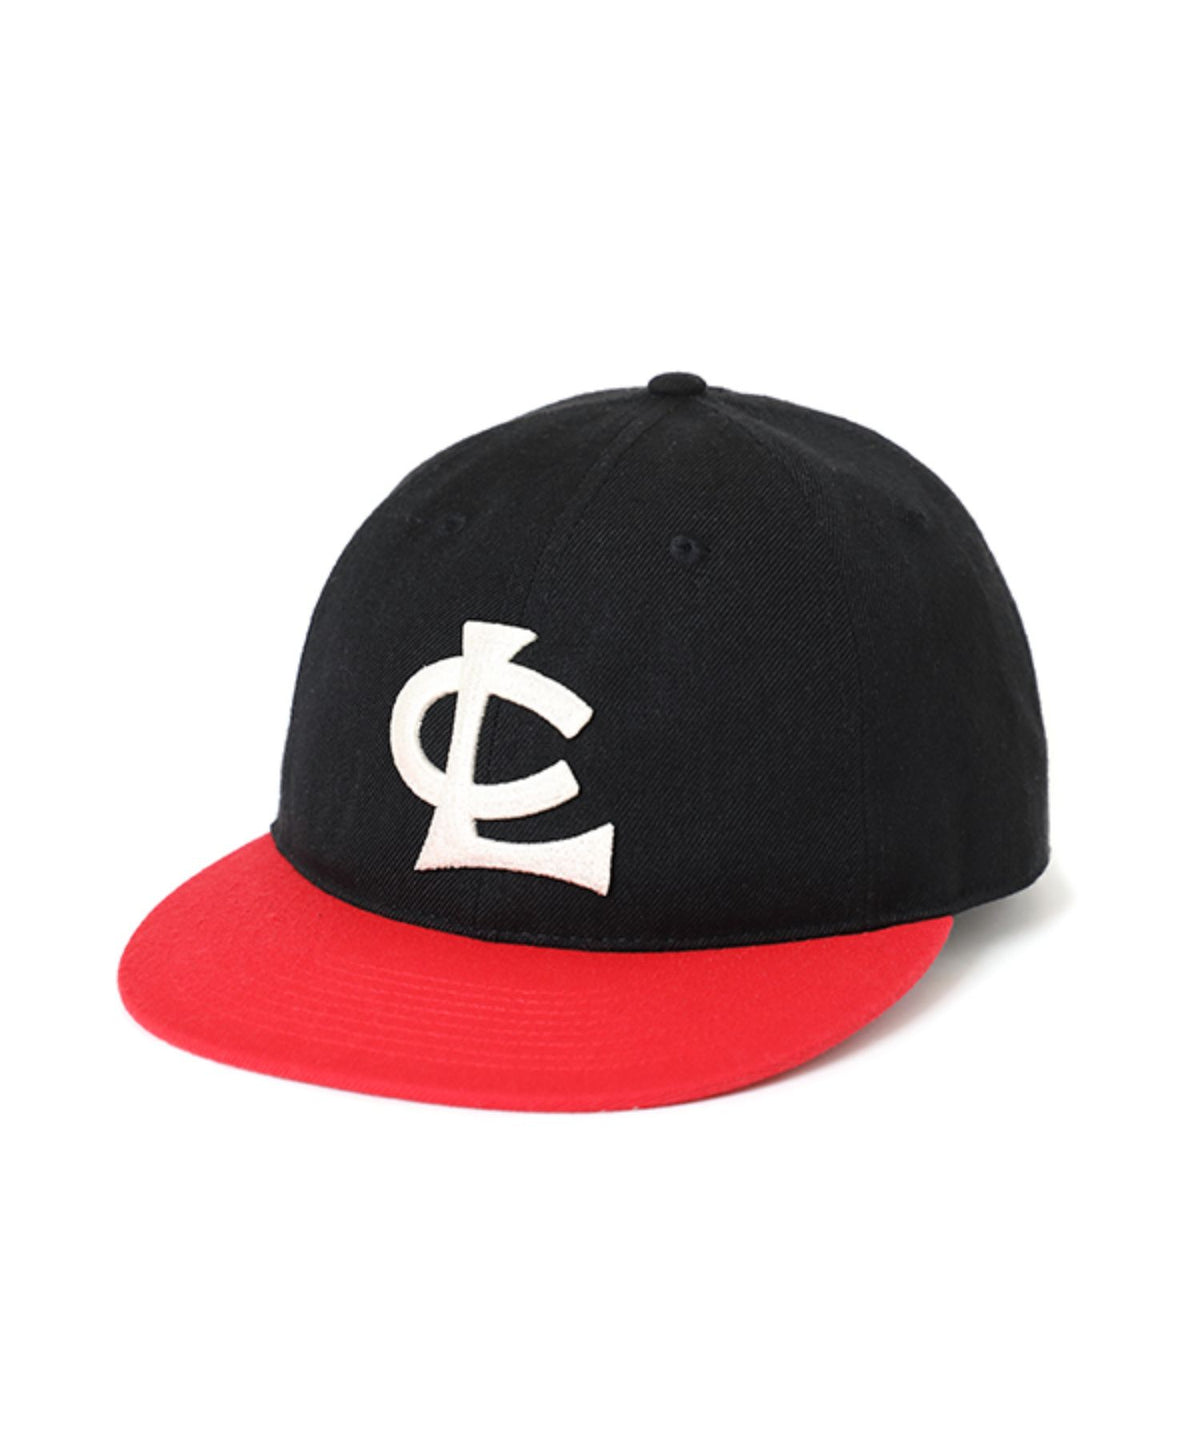 CL Baseball Cap